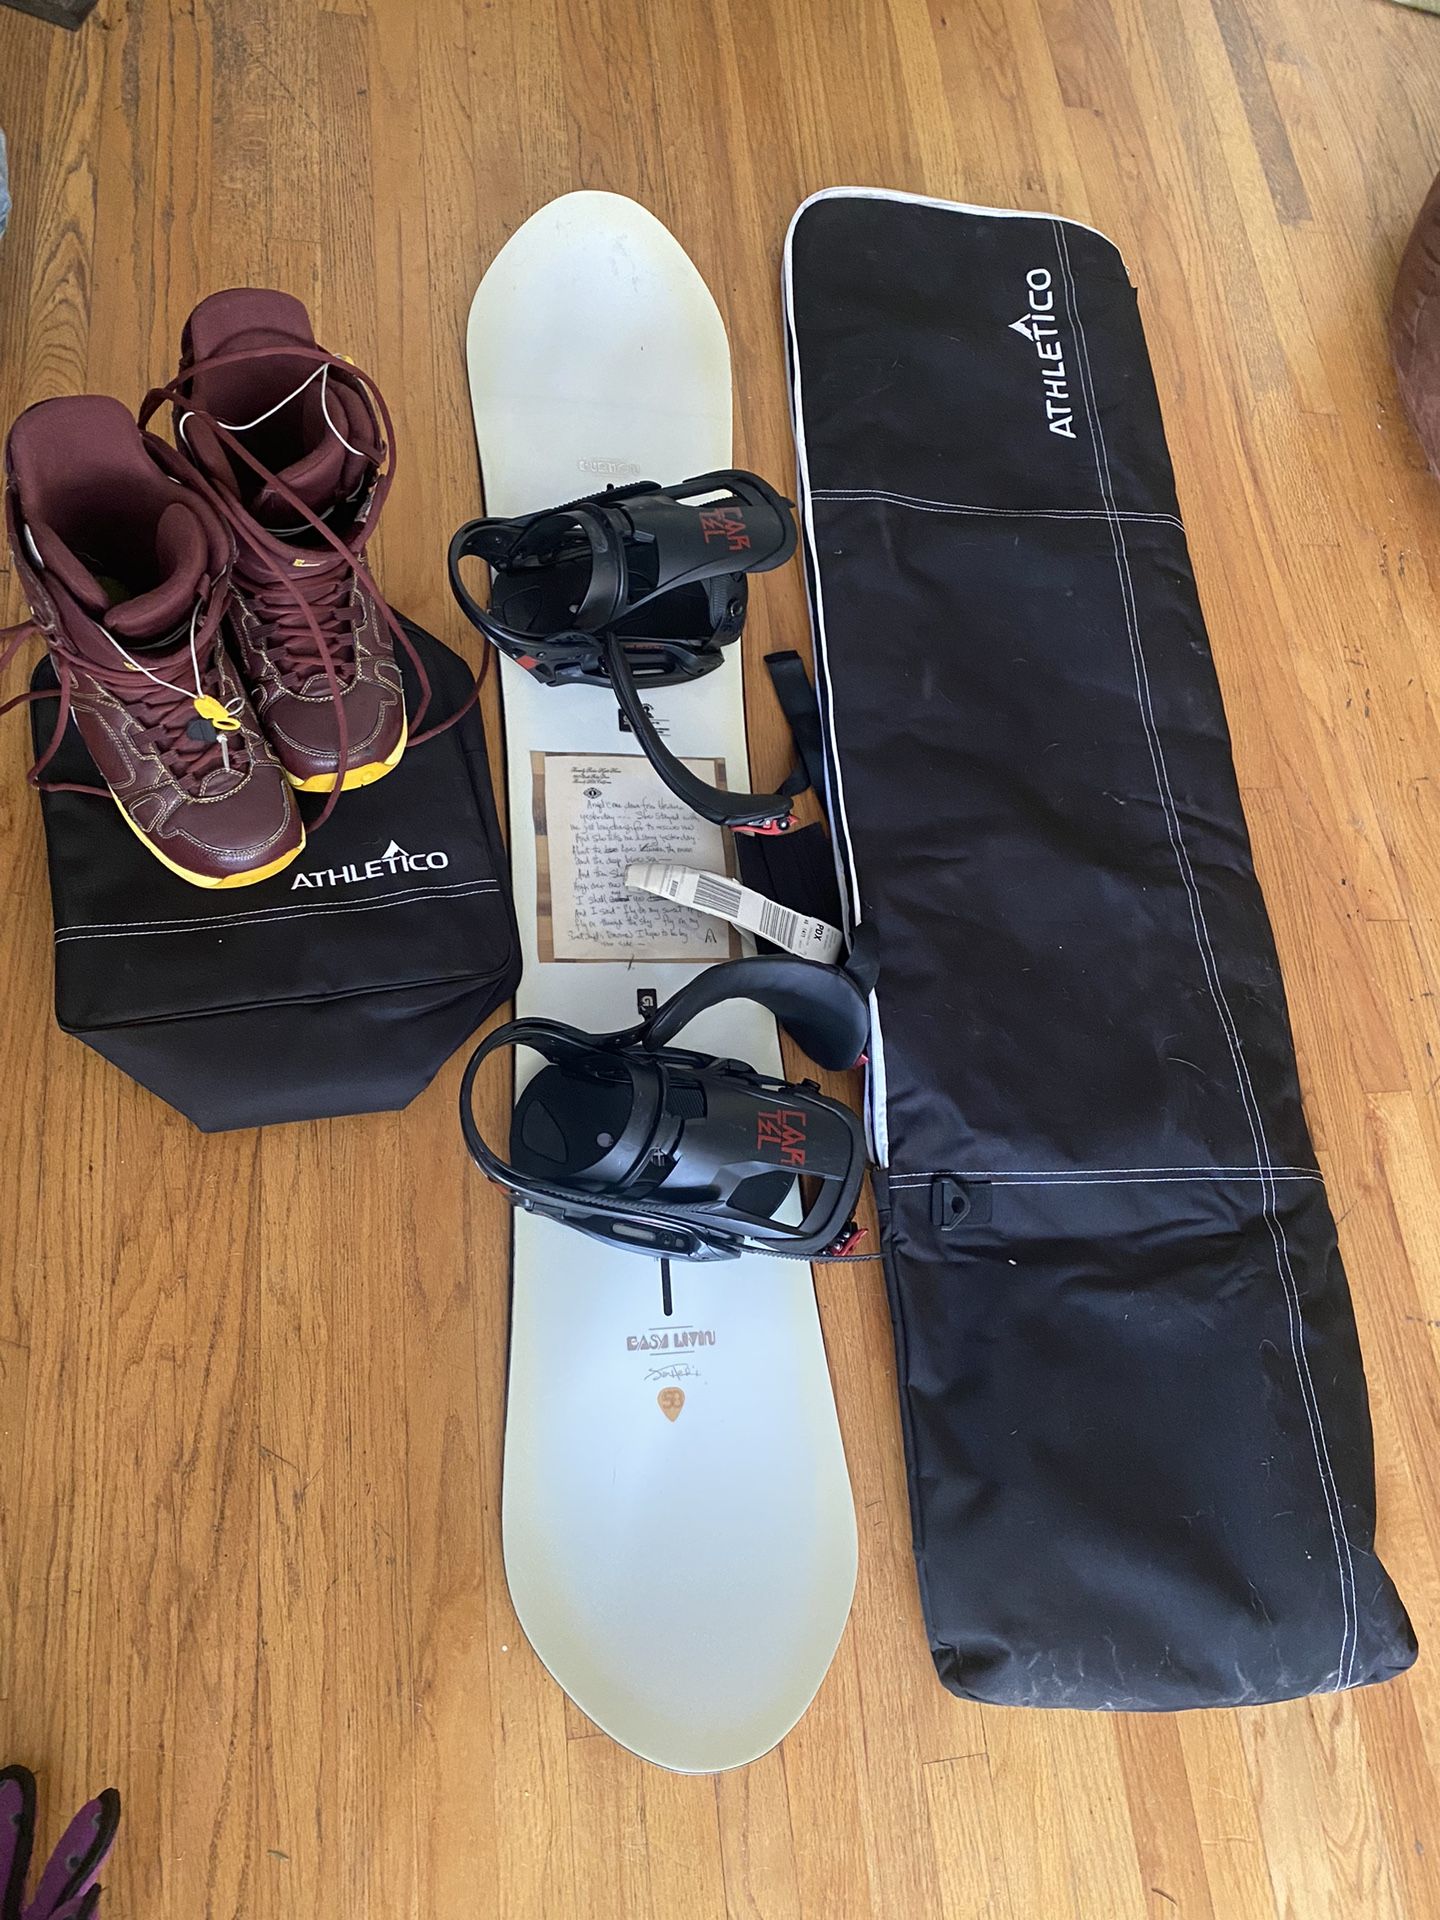 Burton Free Livin’ Flying V snowboard and gear